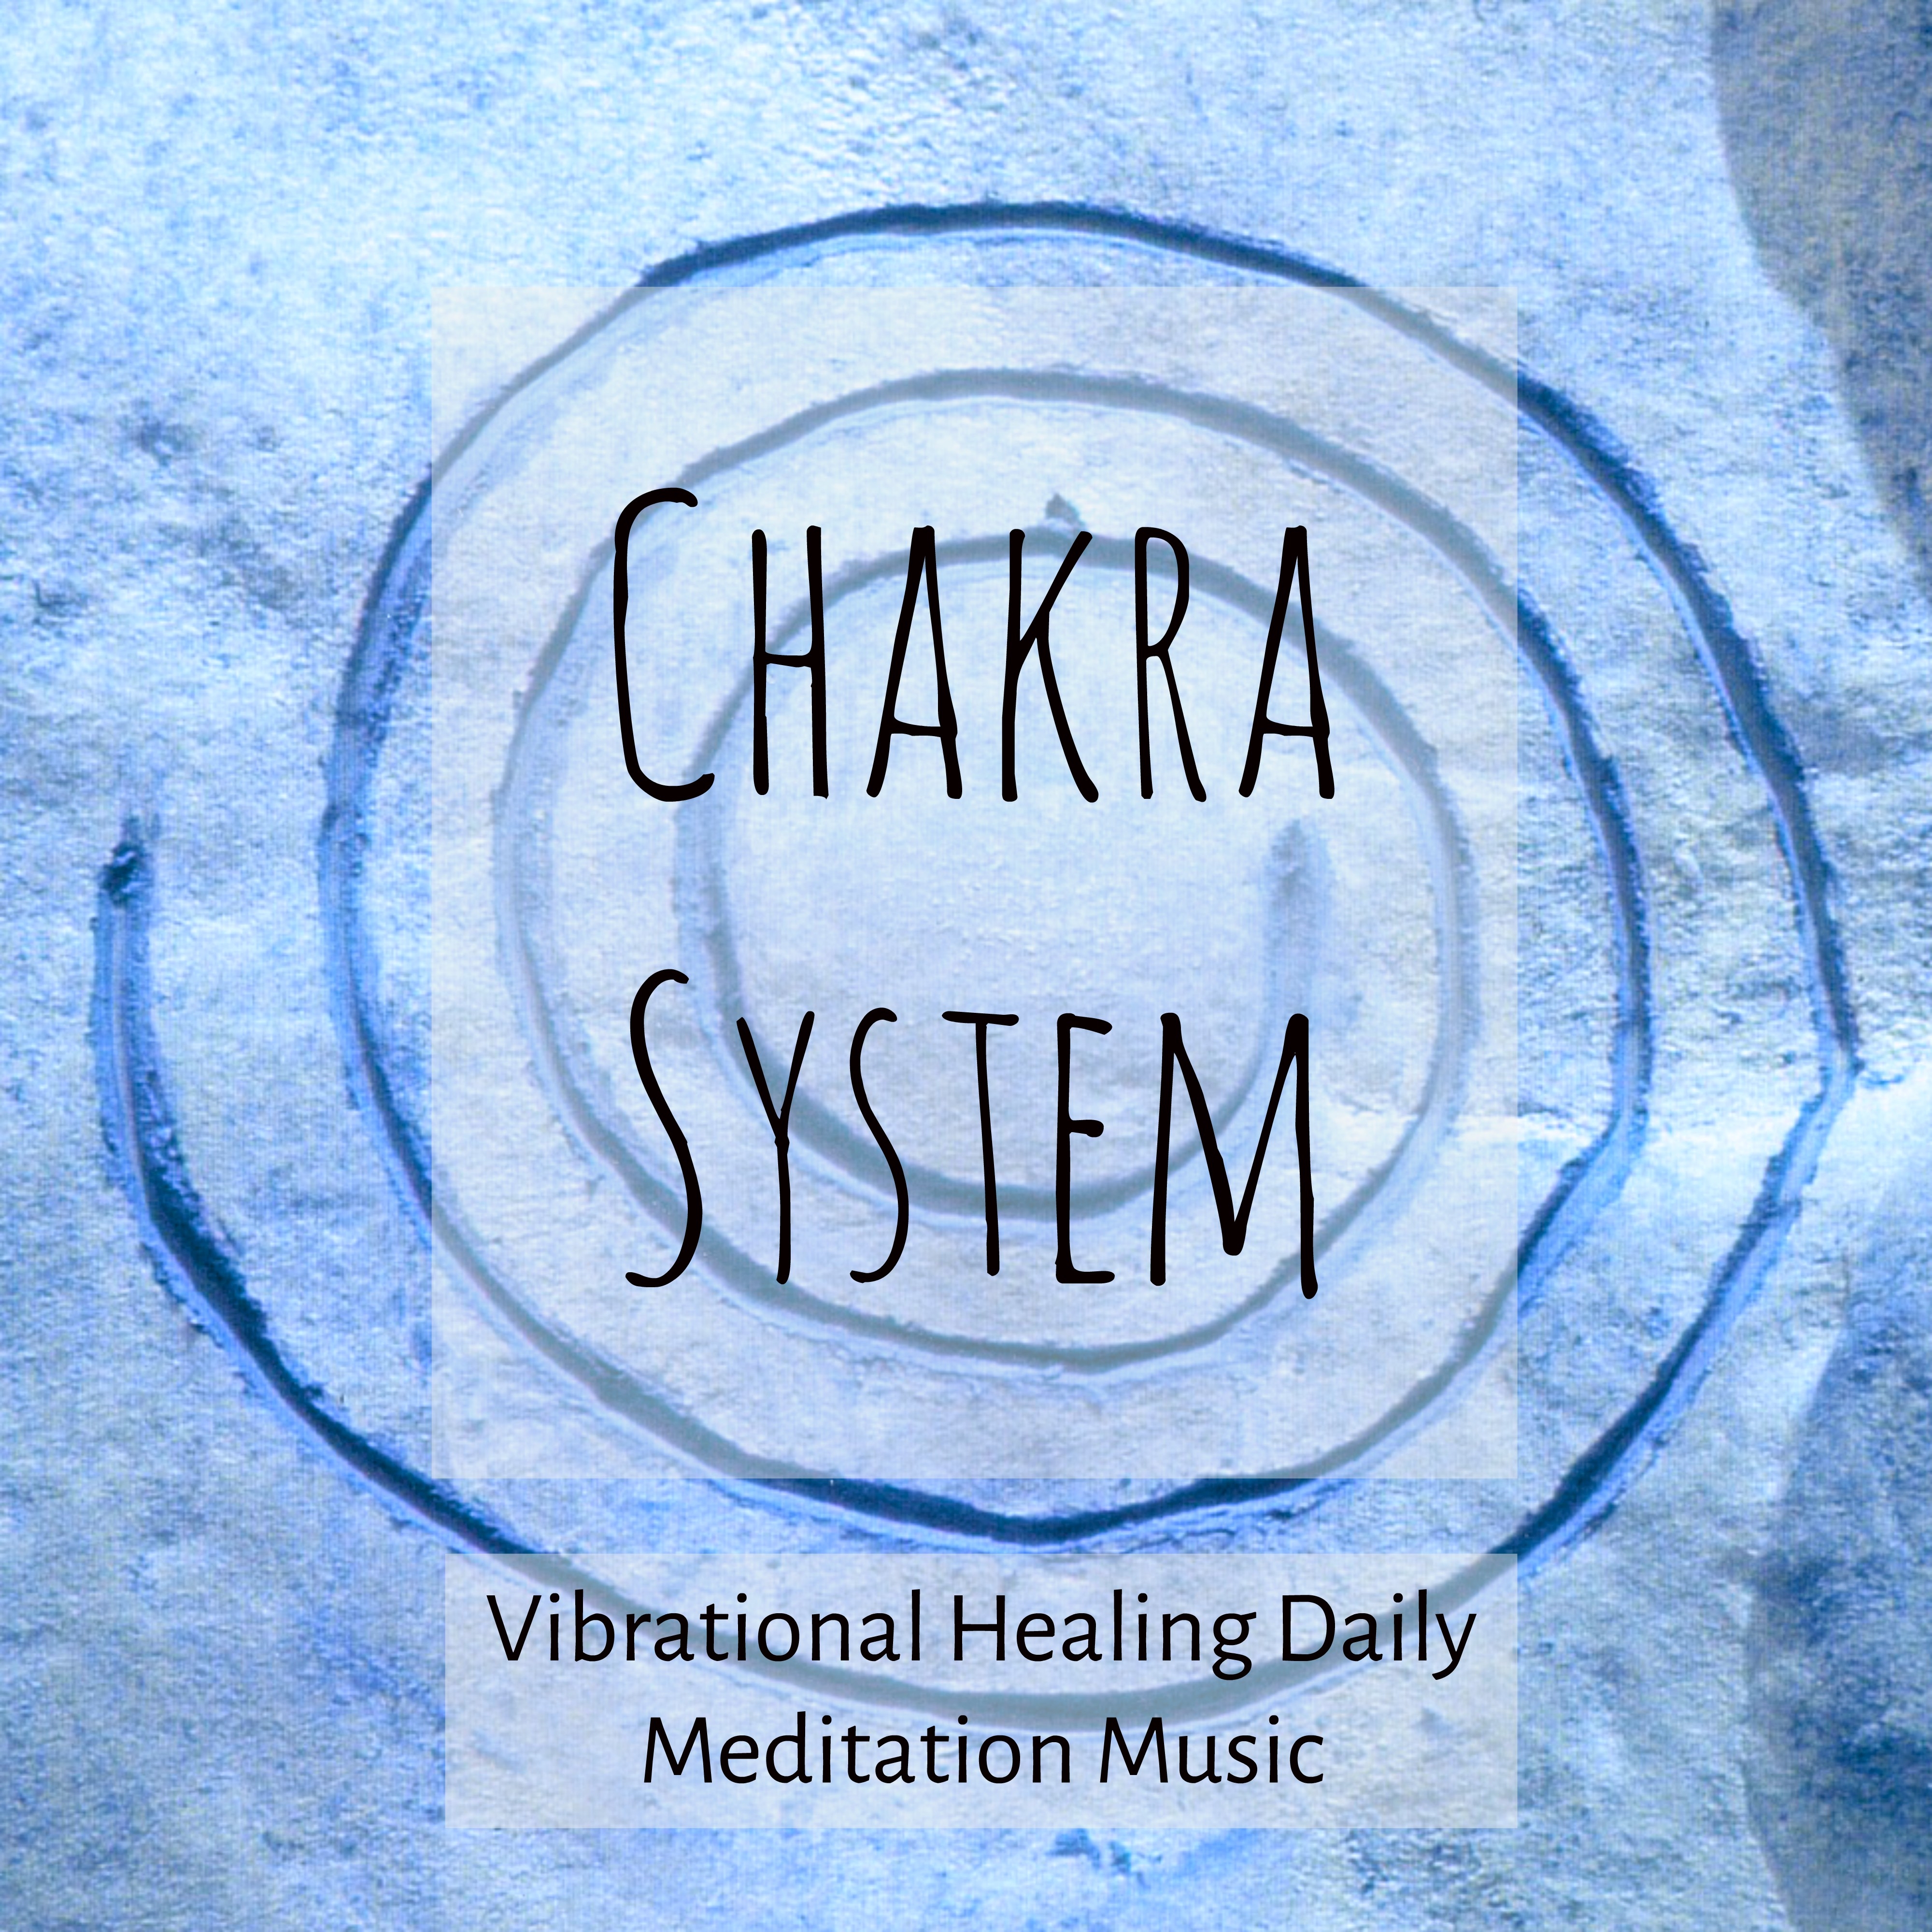 Chakra System - Vibrational Healing Daily Meditation Music with Spiritual New Age Nature Background